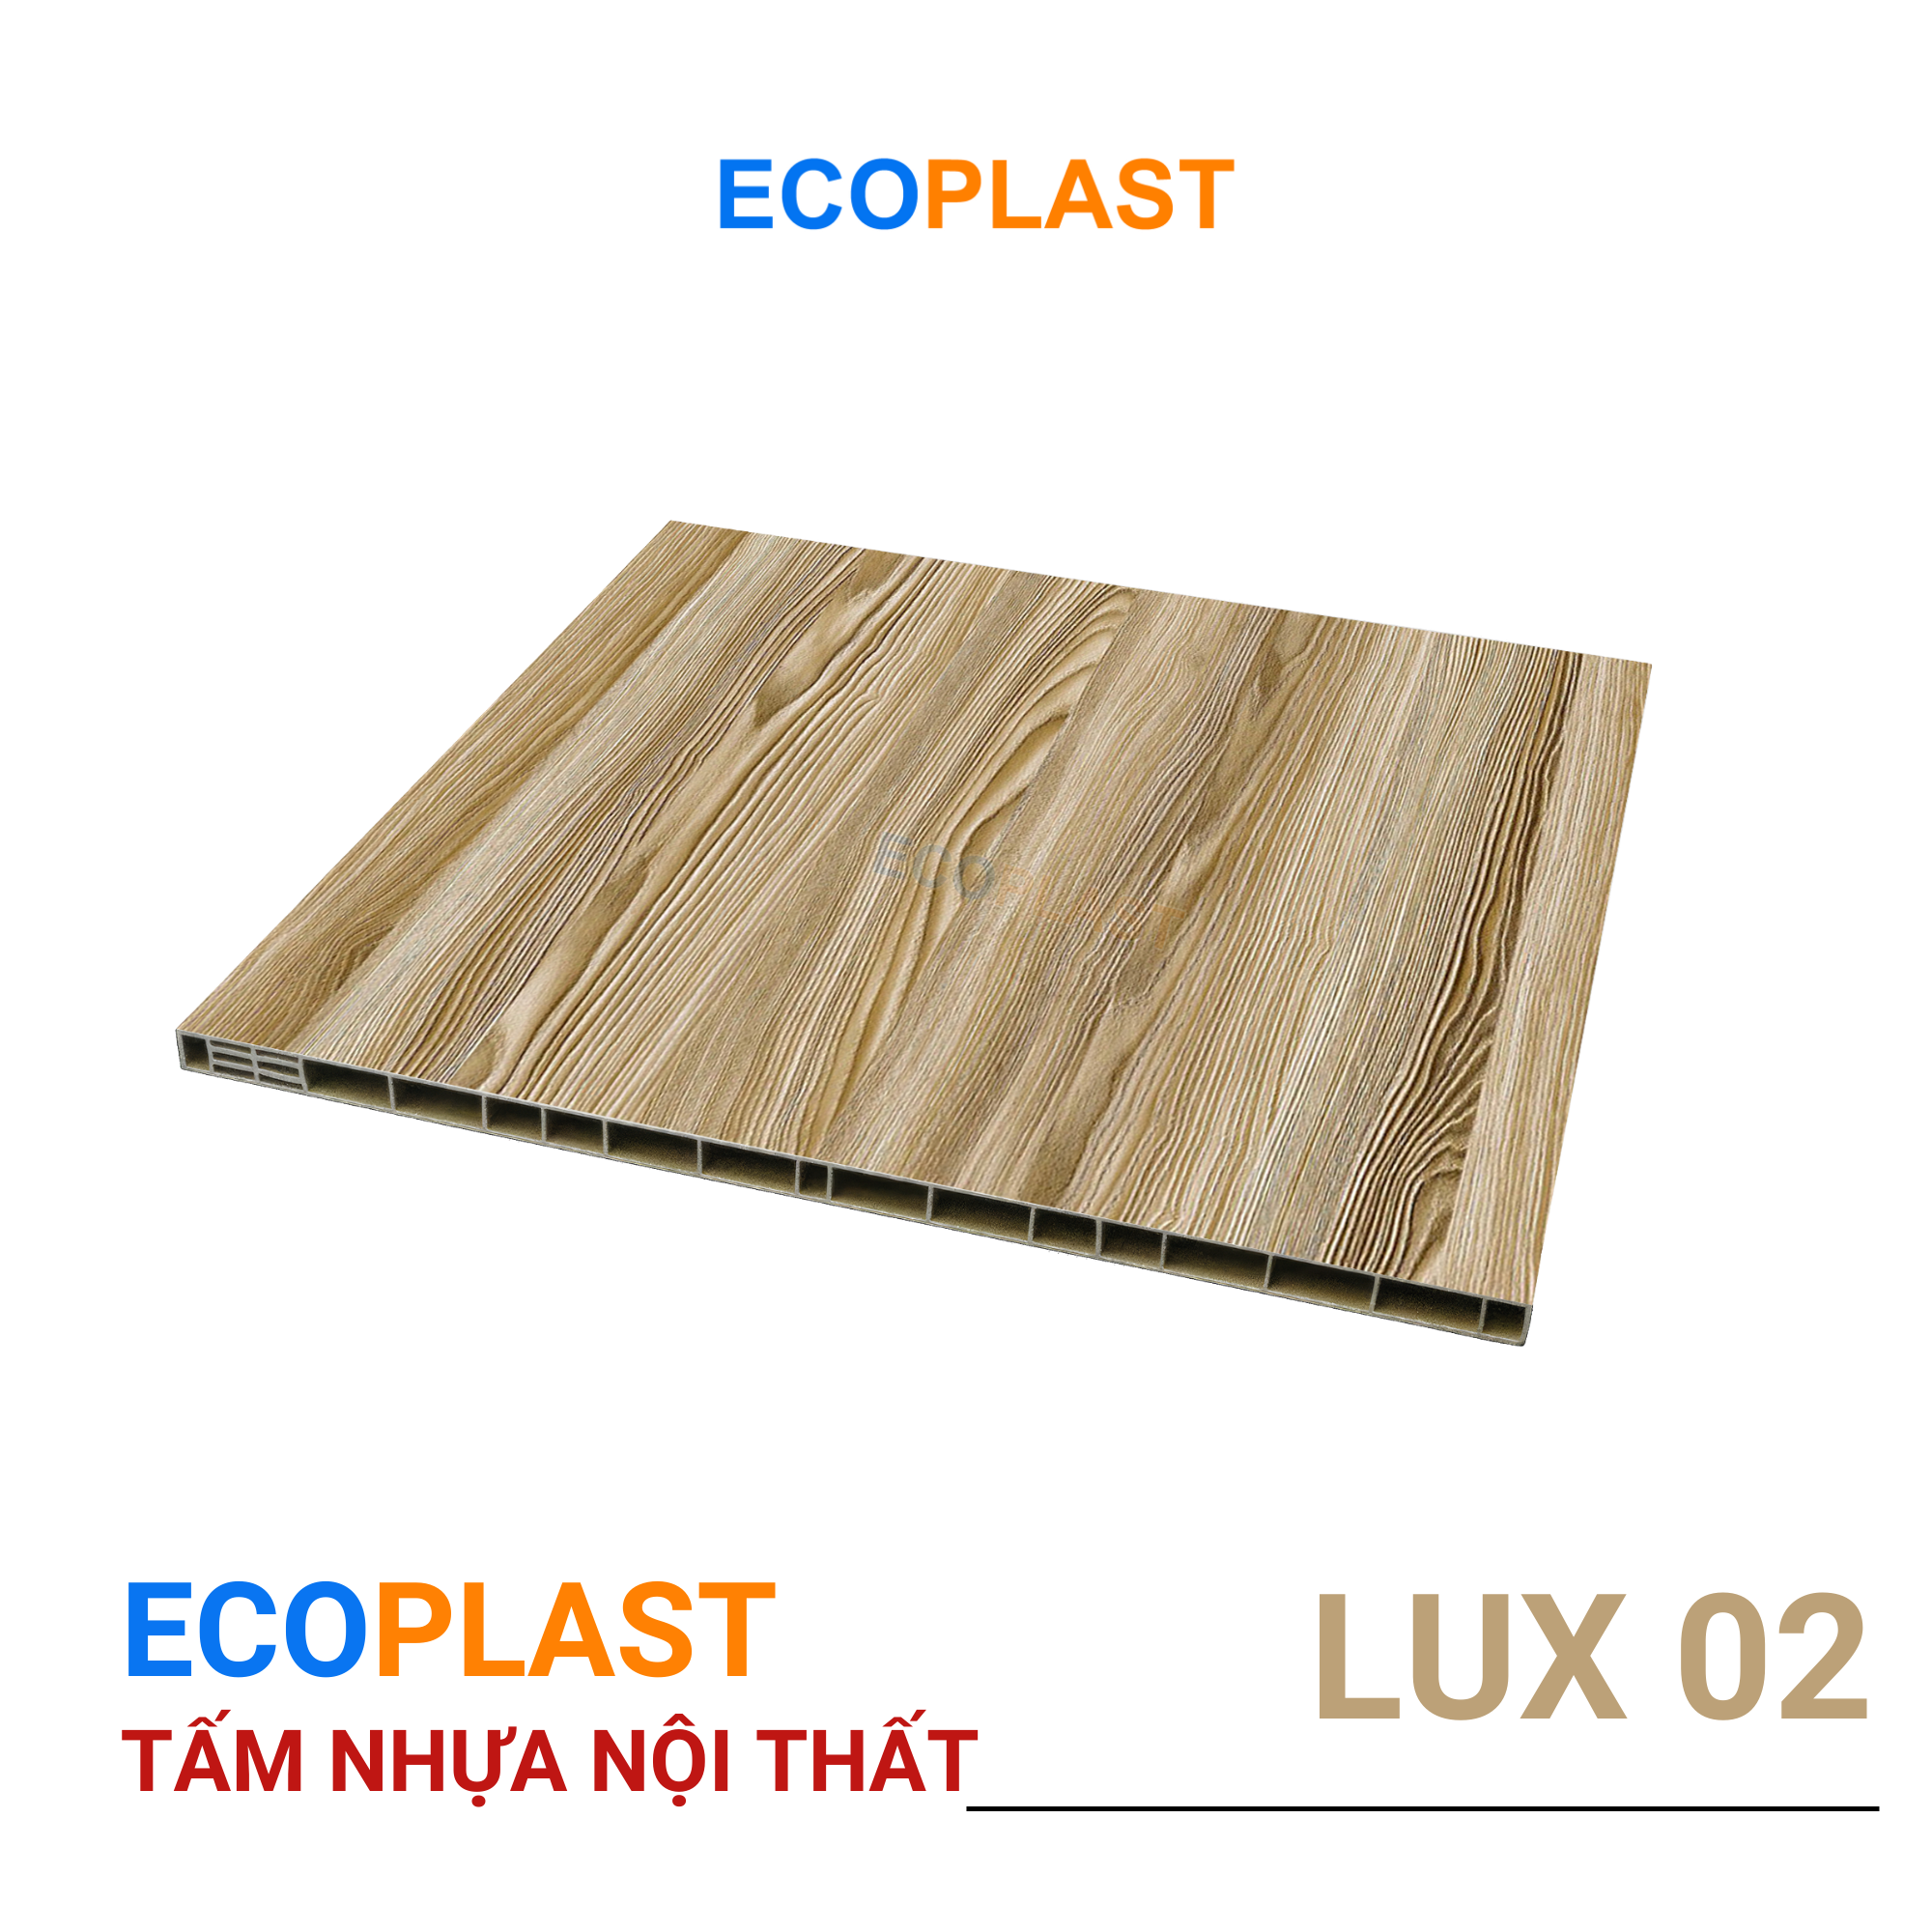 Tấm nhựa nội thất Ecoplast Luxury - Lux 02